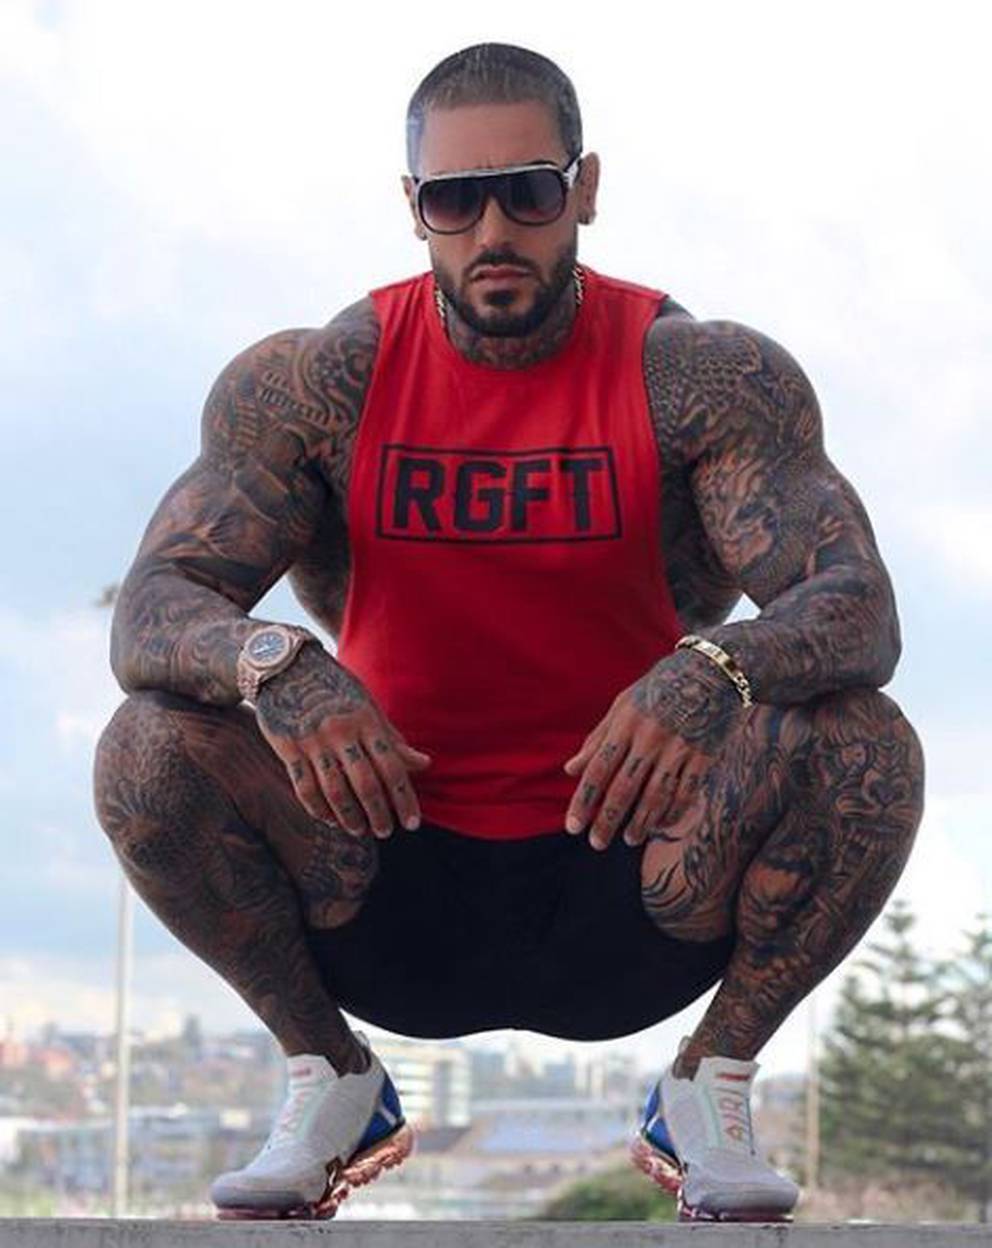 Tattooed 'Muslim soldier' slammed for Instagram posts - NZ Herald